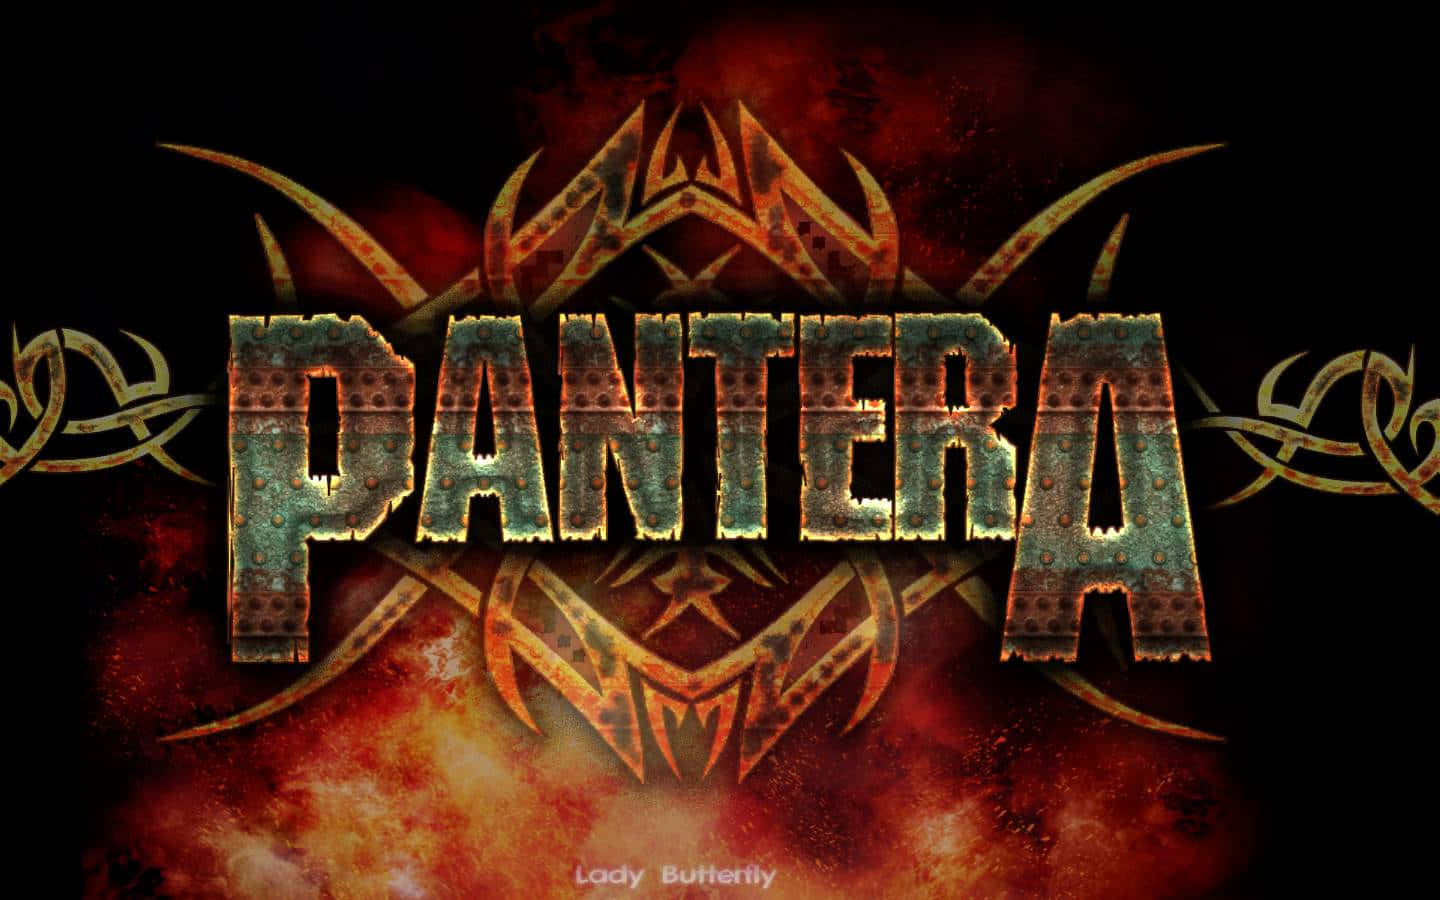 Pantera Skull Logo